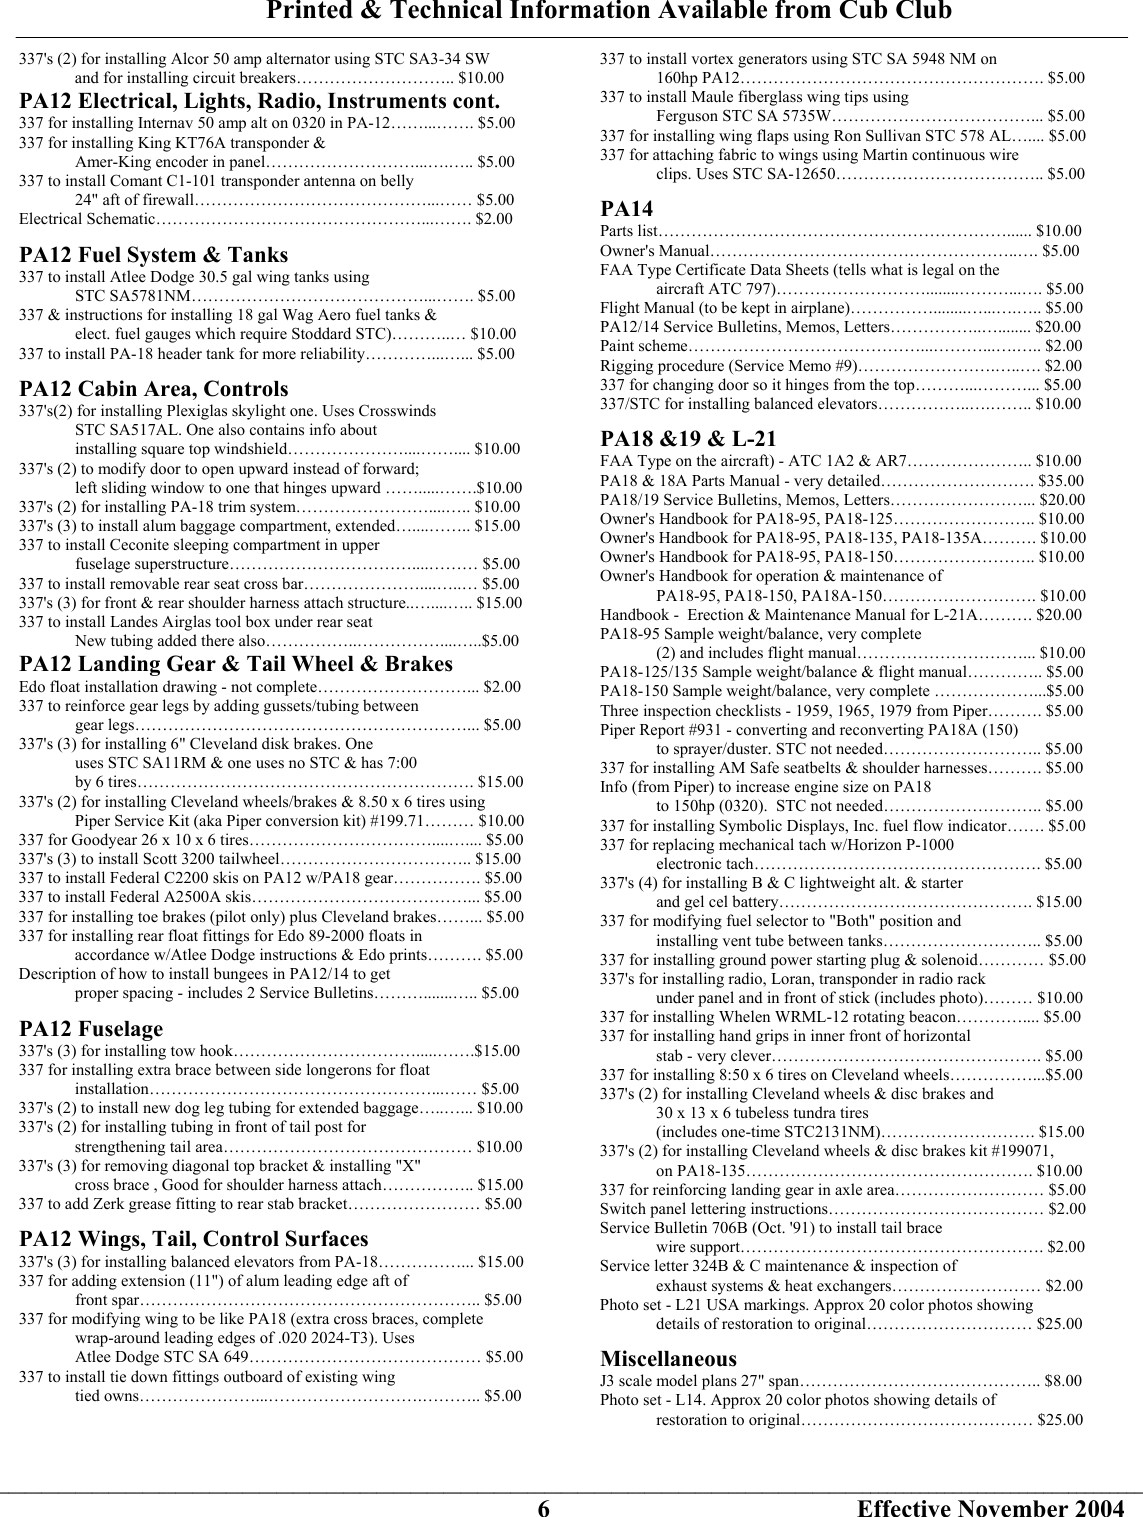 Page 6 of 6 - LWNT_470 PA18_Printed Techlist PA18 Printed